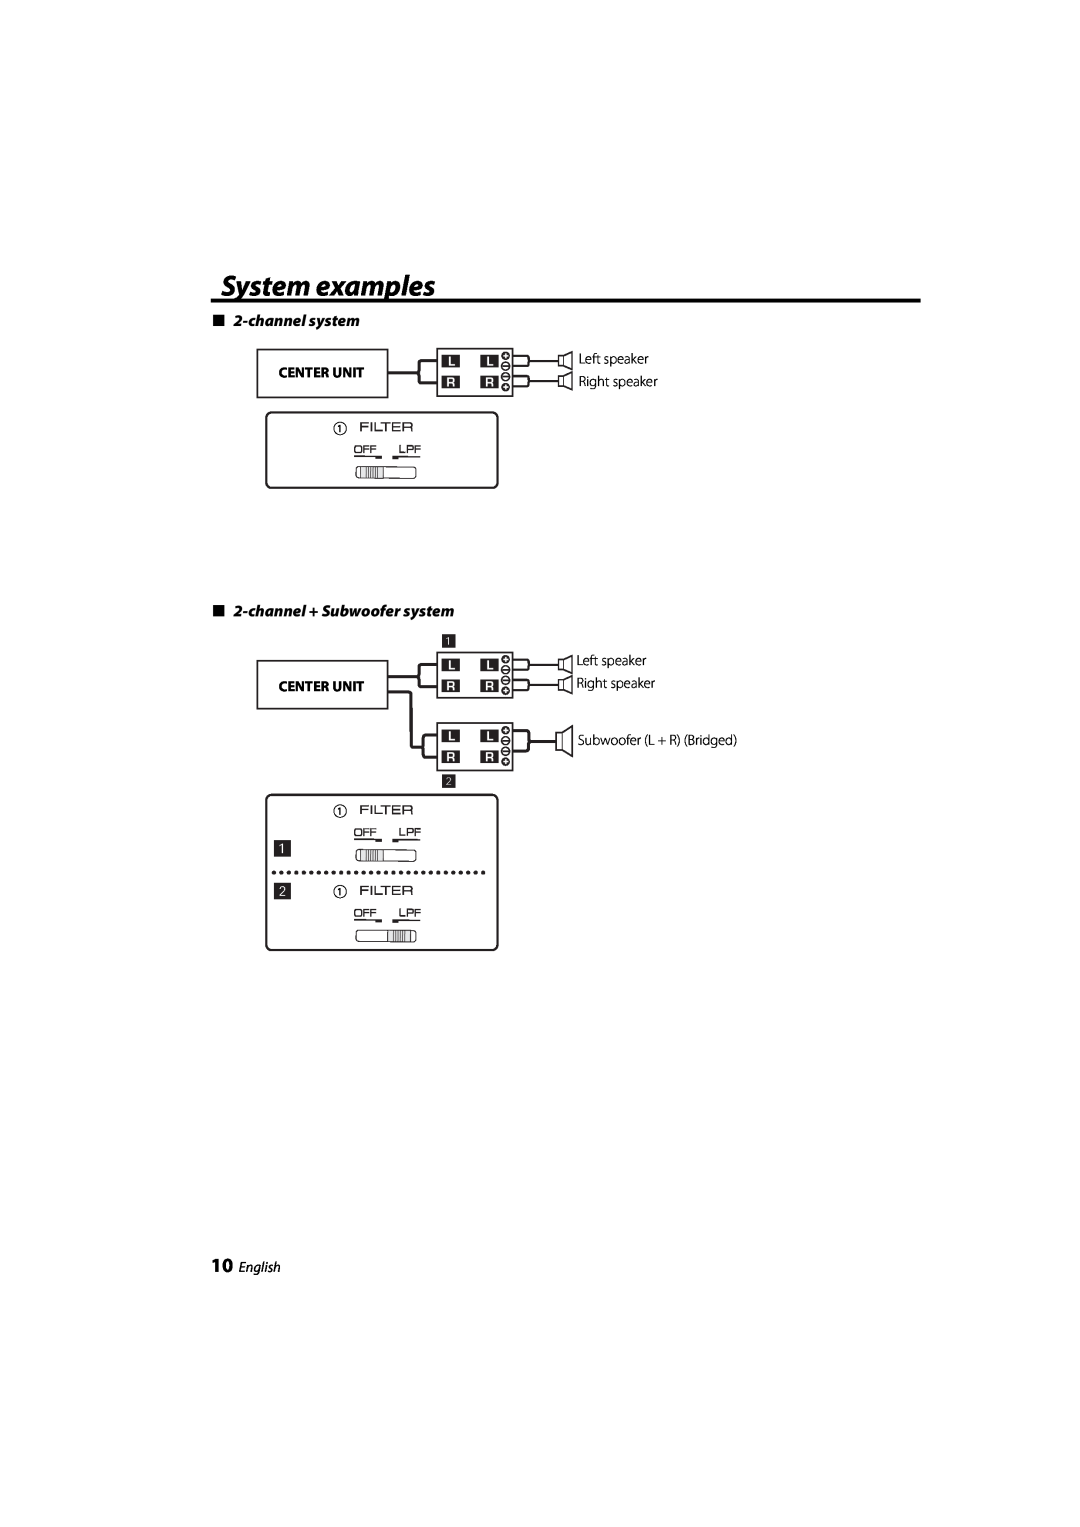 Kenwood KAC-6203 System examples, channelsystem, channel+ Subwoofer system, 10English, Center Unit, Right speaker 